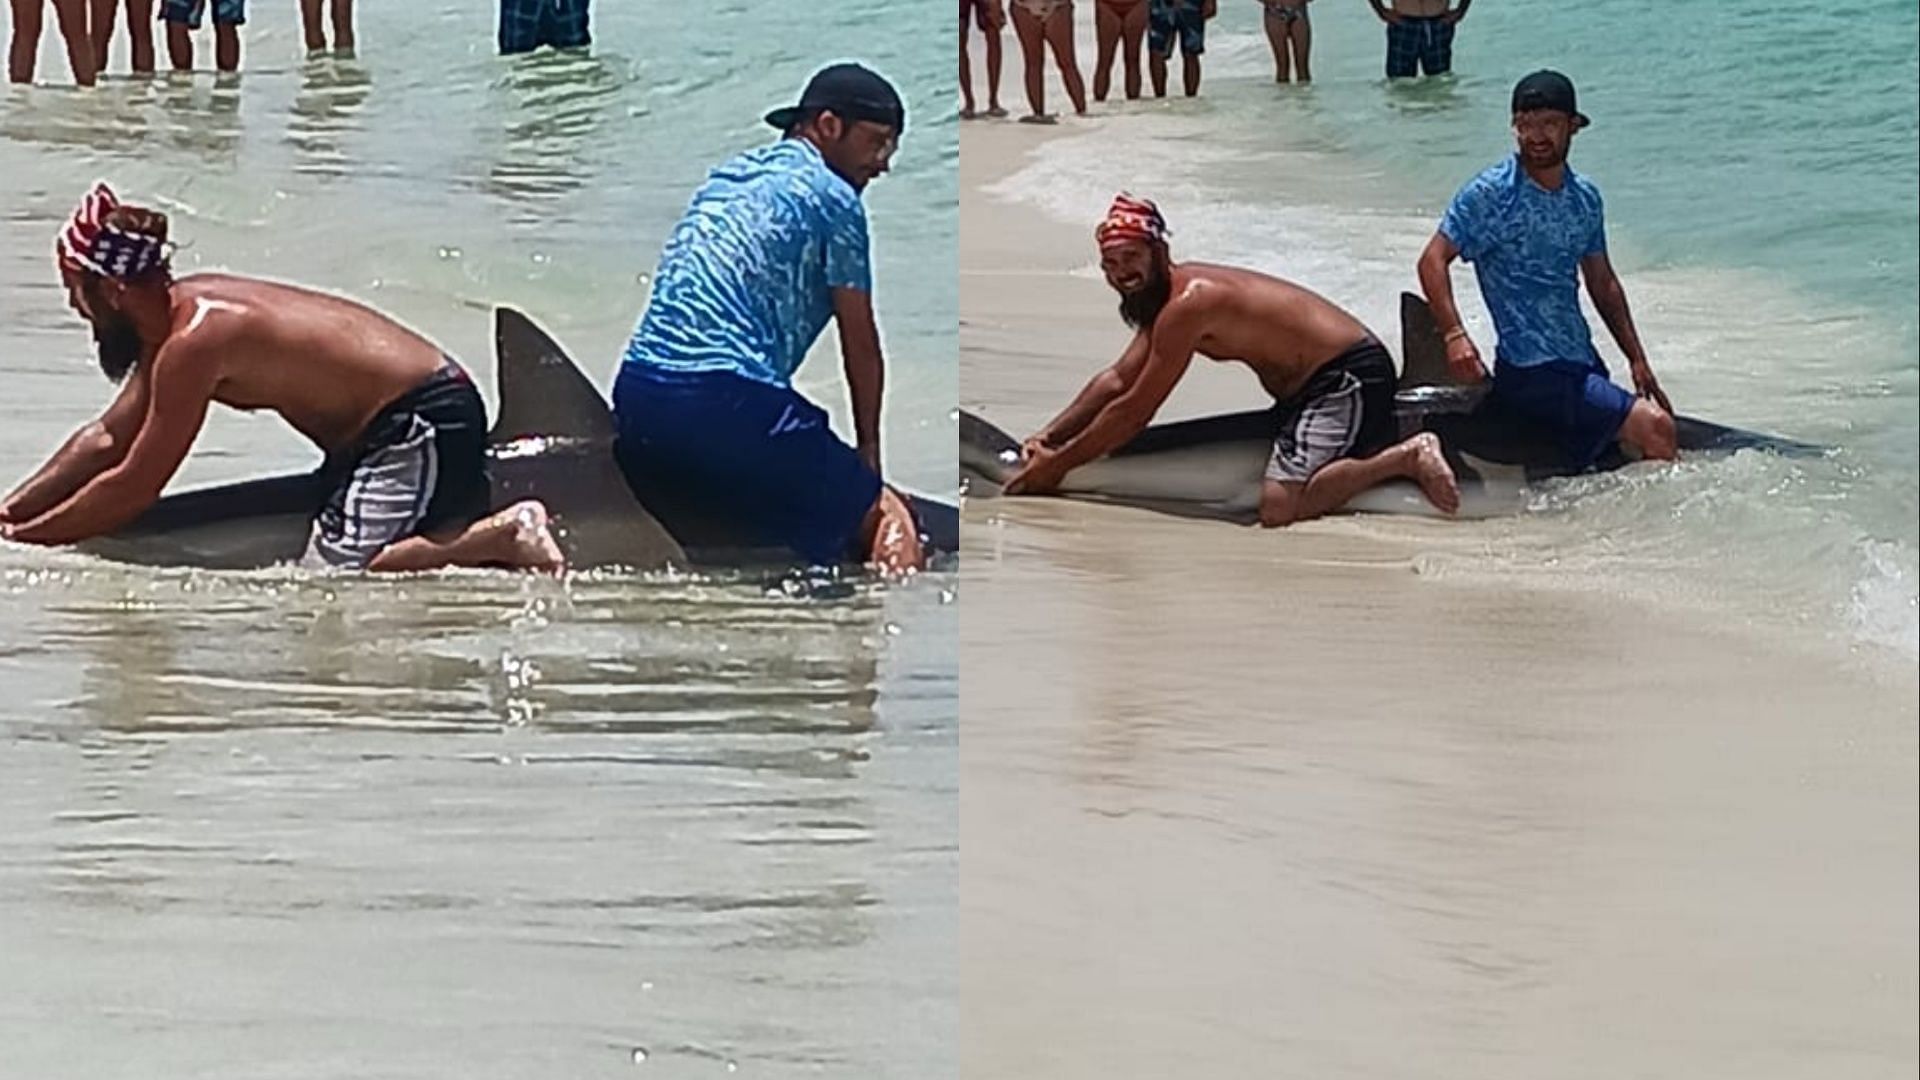 Viral shark video at the Panama City Beach leaves netizens enraged. (Image via Facebook/Tammy Scott)